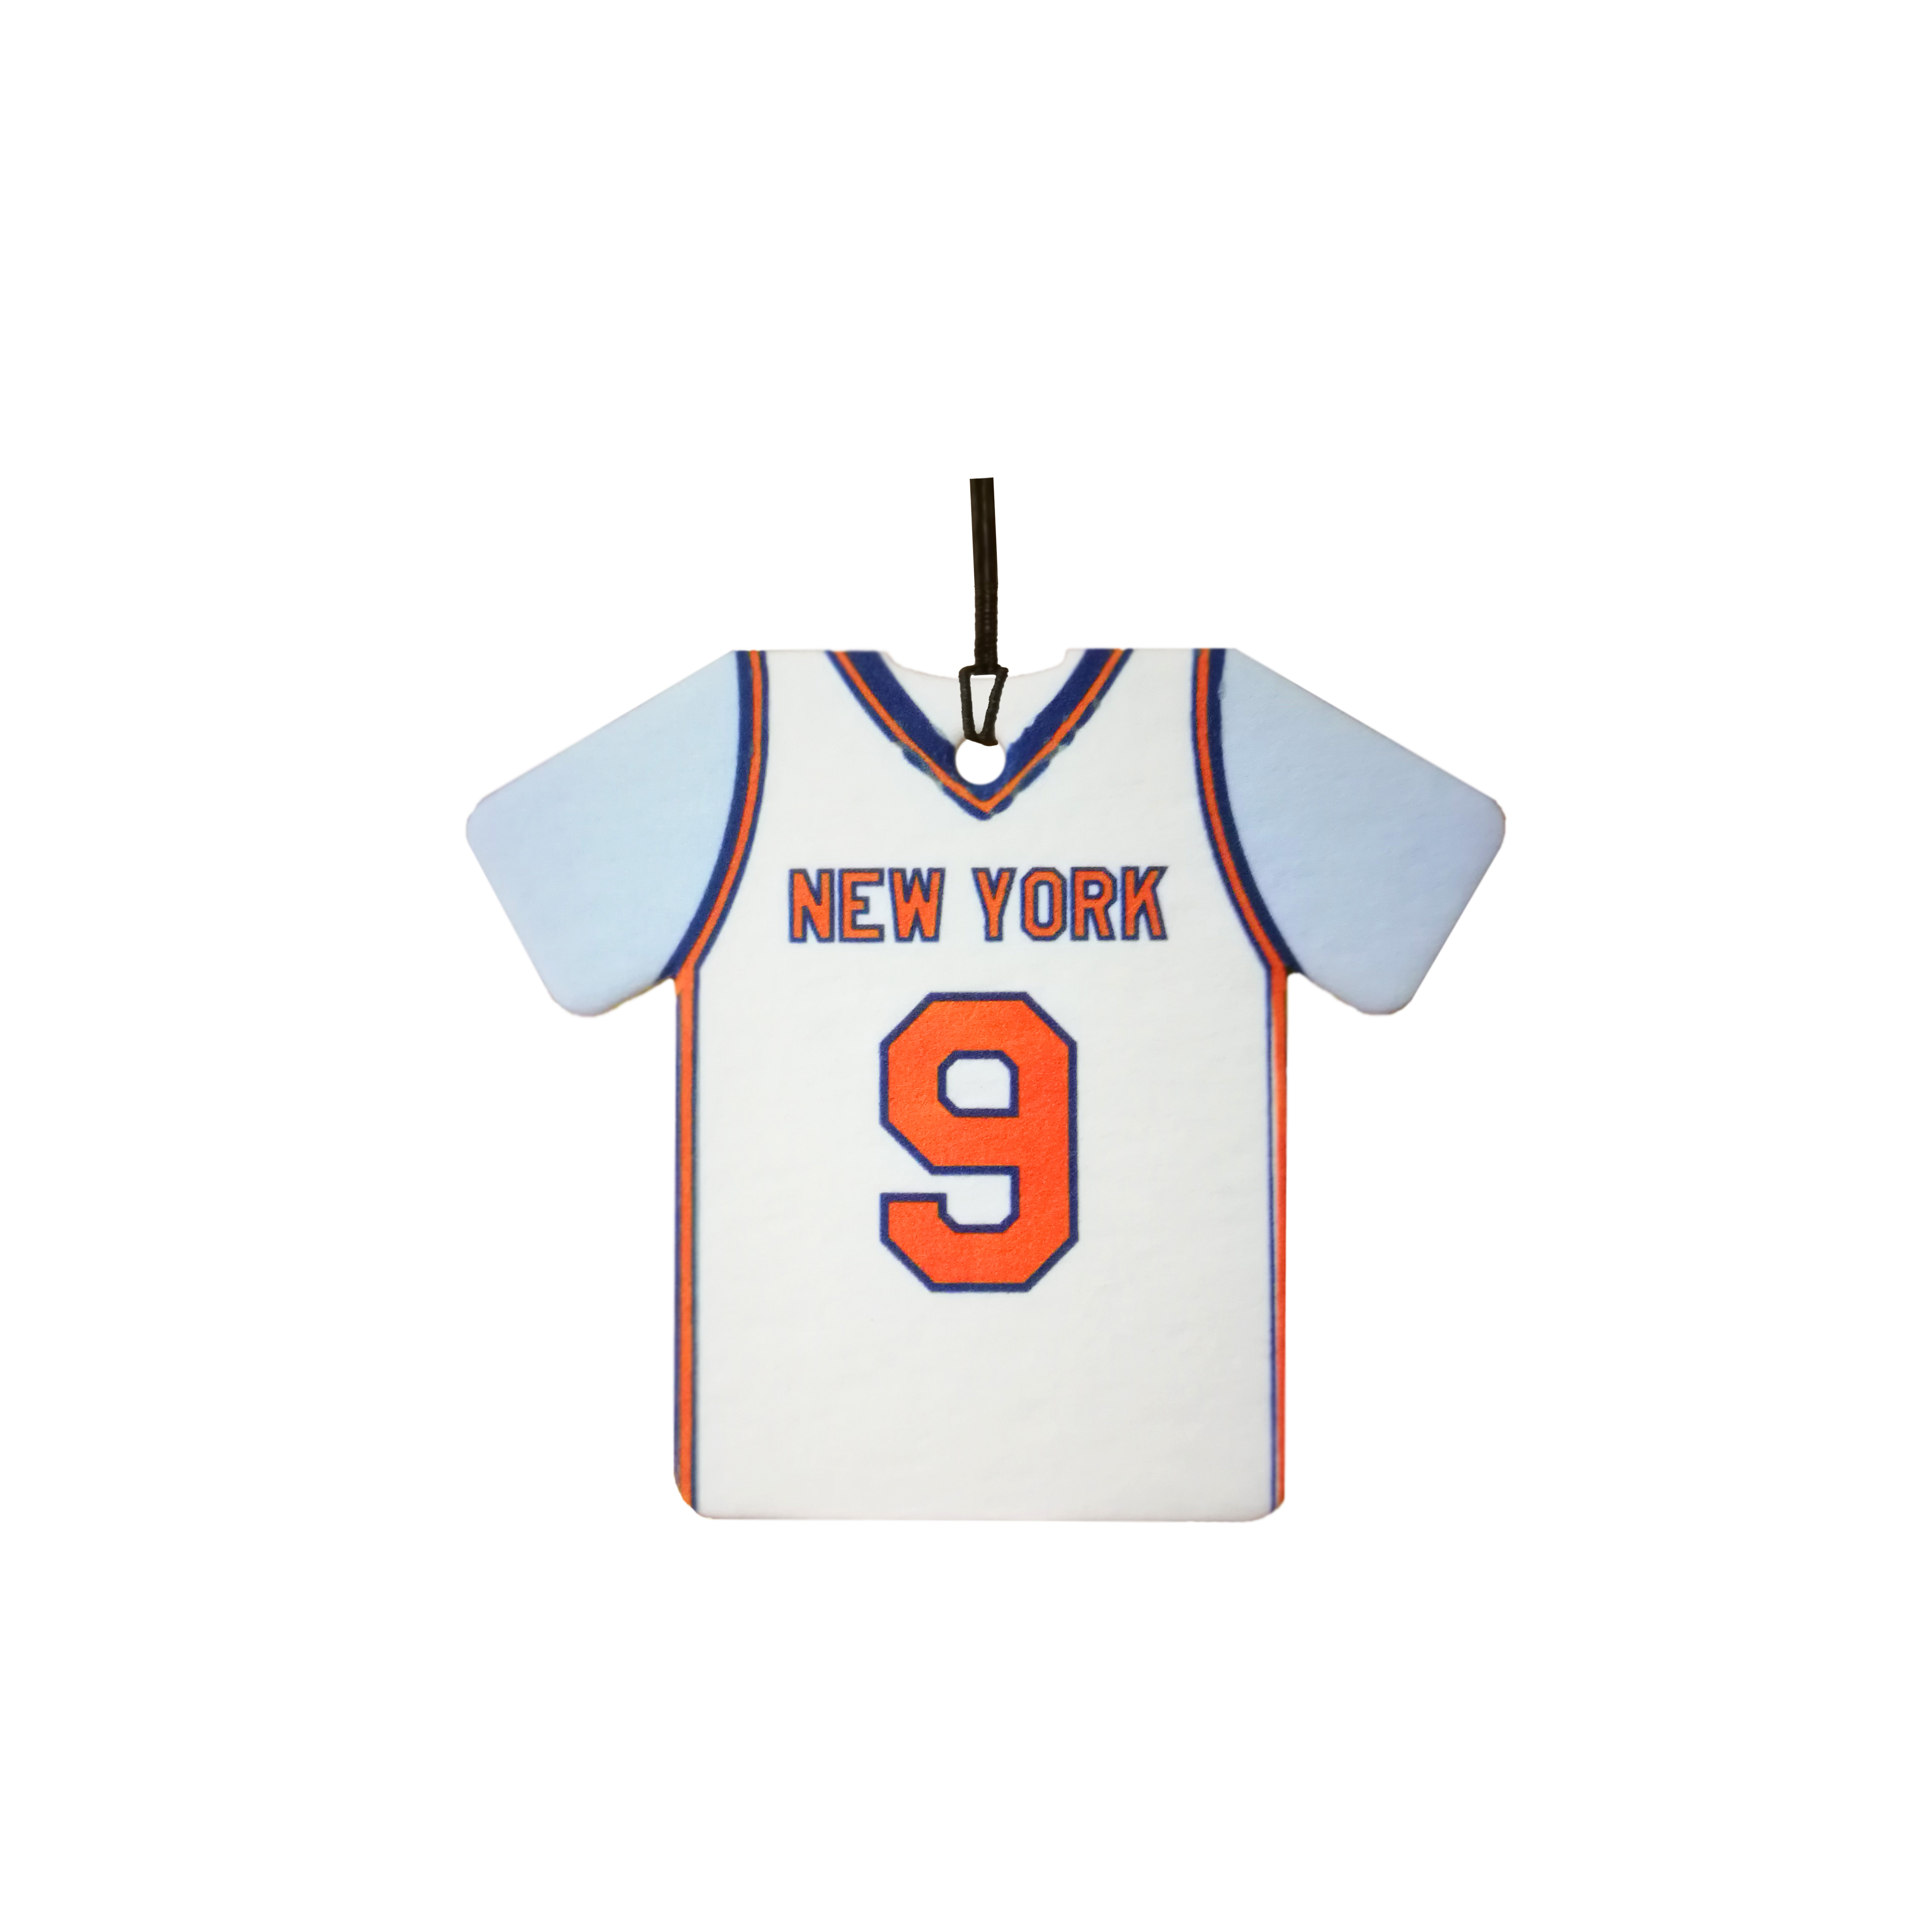 Personalised New York Knicks Basketball Shirt